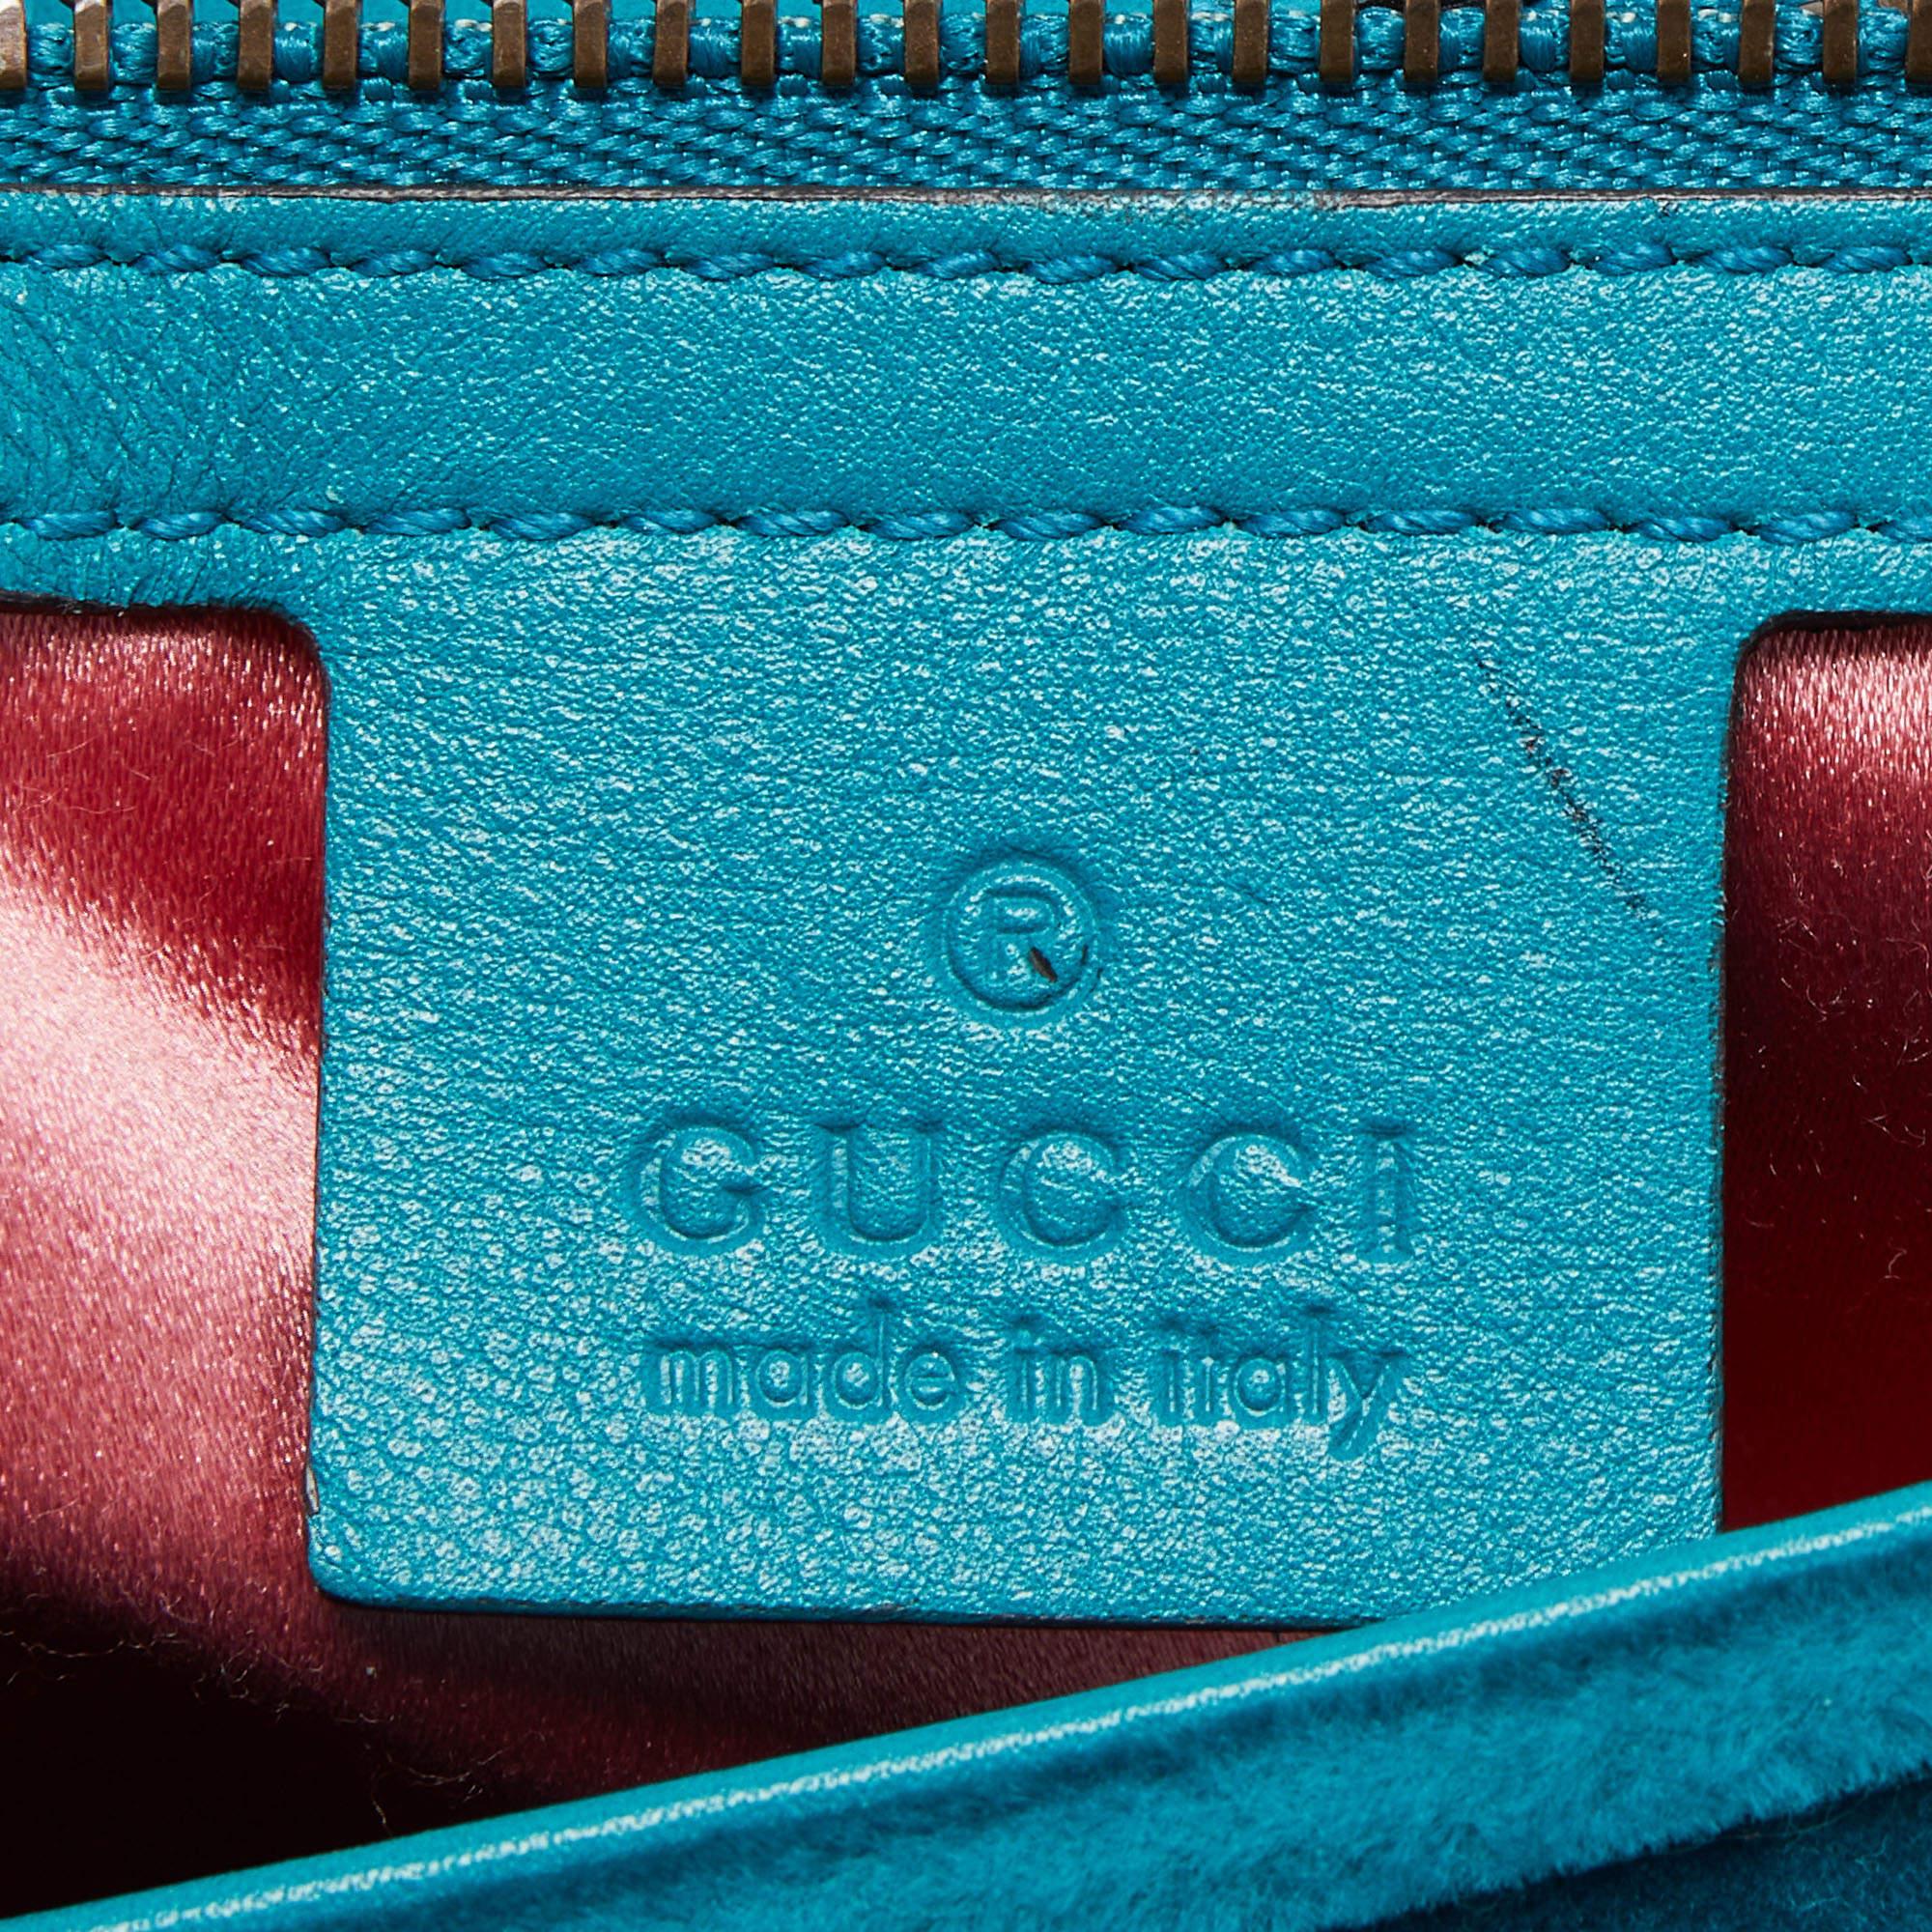 Gucci Green Matelassé Velvet Small GG Marmont Shoulder Bag 2